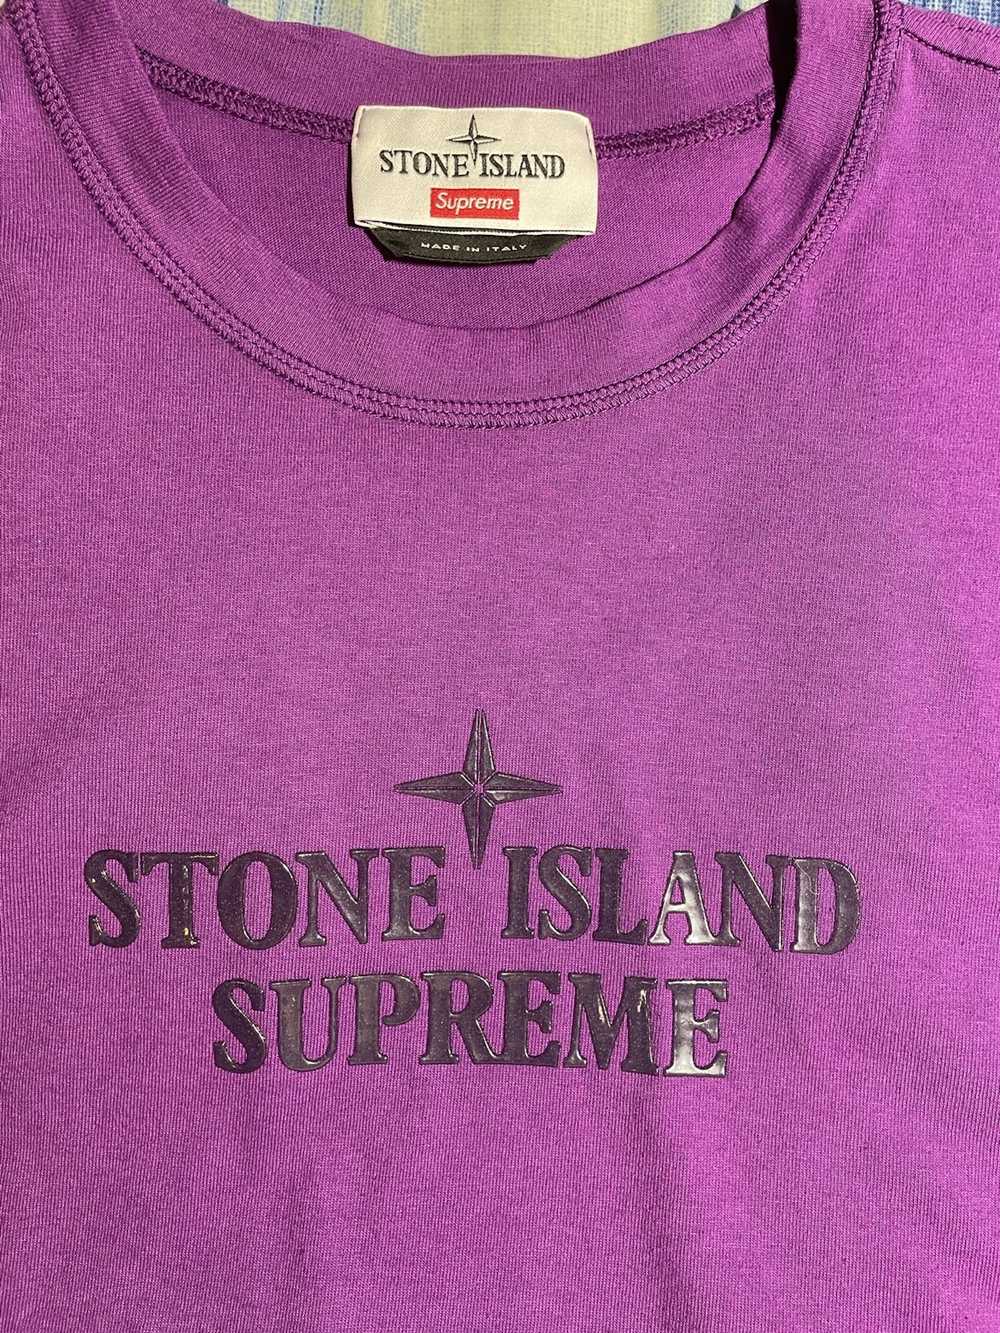 Supreme x Stone Island Hooded Sweatshirt Red - Novelship